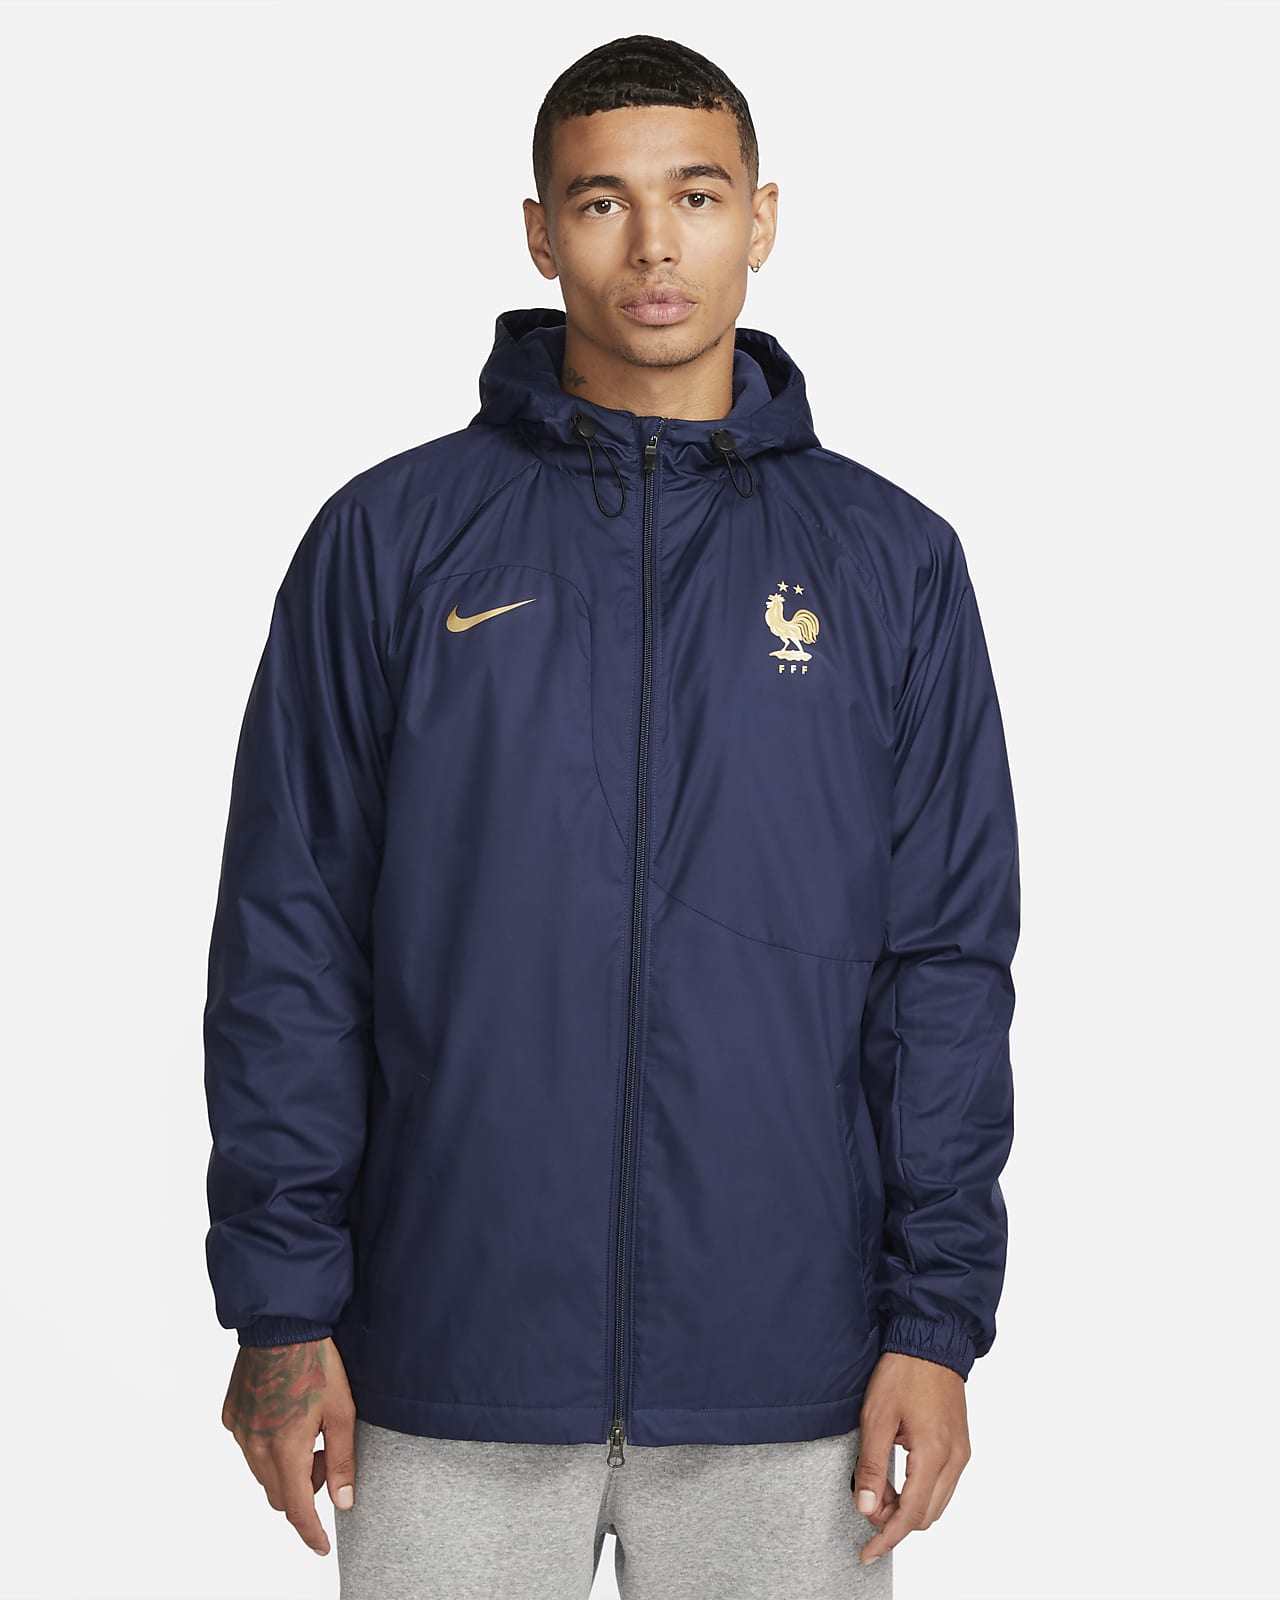 Buy FINZ Lycra Dryfit Sports Jackets for Men - Gym Cricket Casual Running  Jacket - Full Front Zip Comfortable online | Looksgud.in